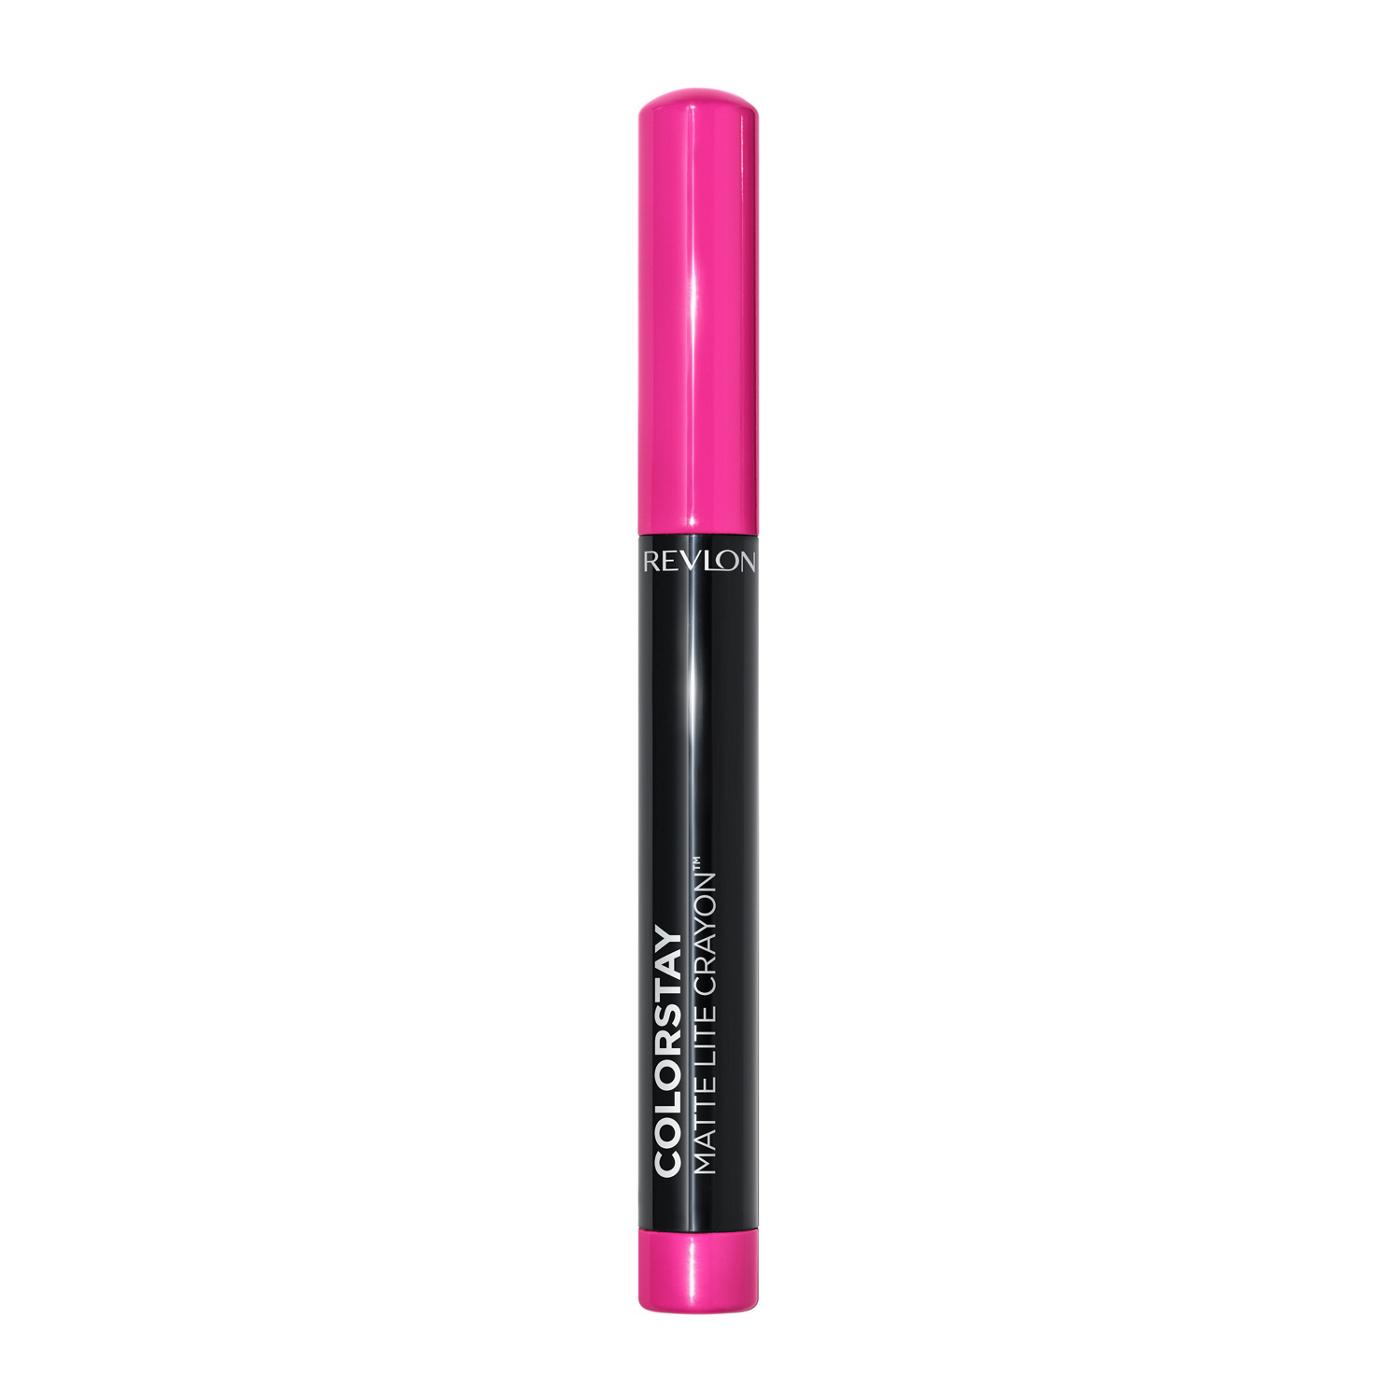 Revlon ColorStay Matte Lite Crayon Lipstick - Mile High; image 1 of 7